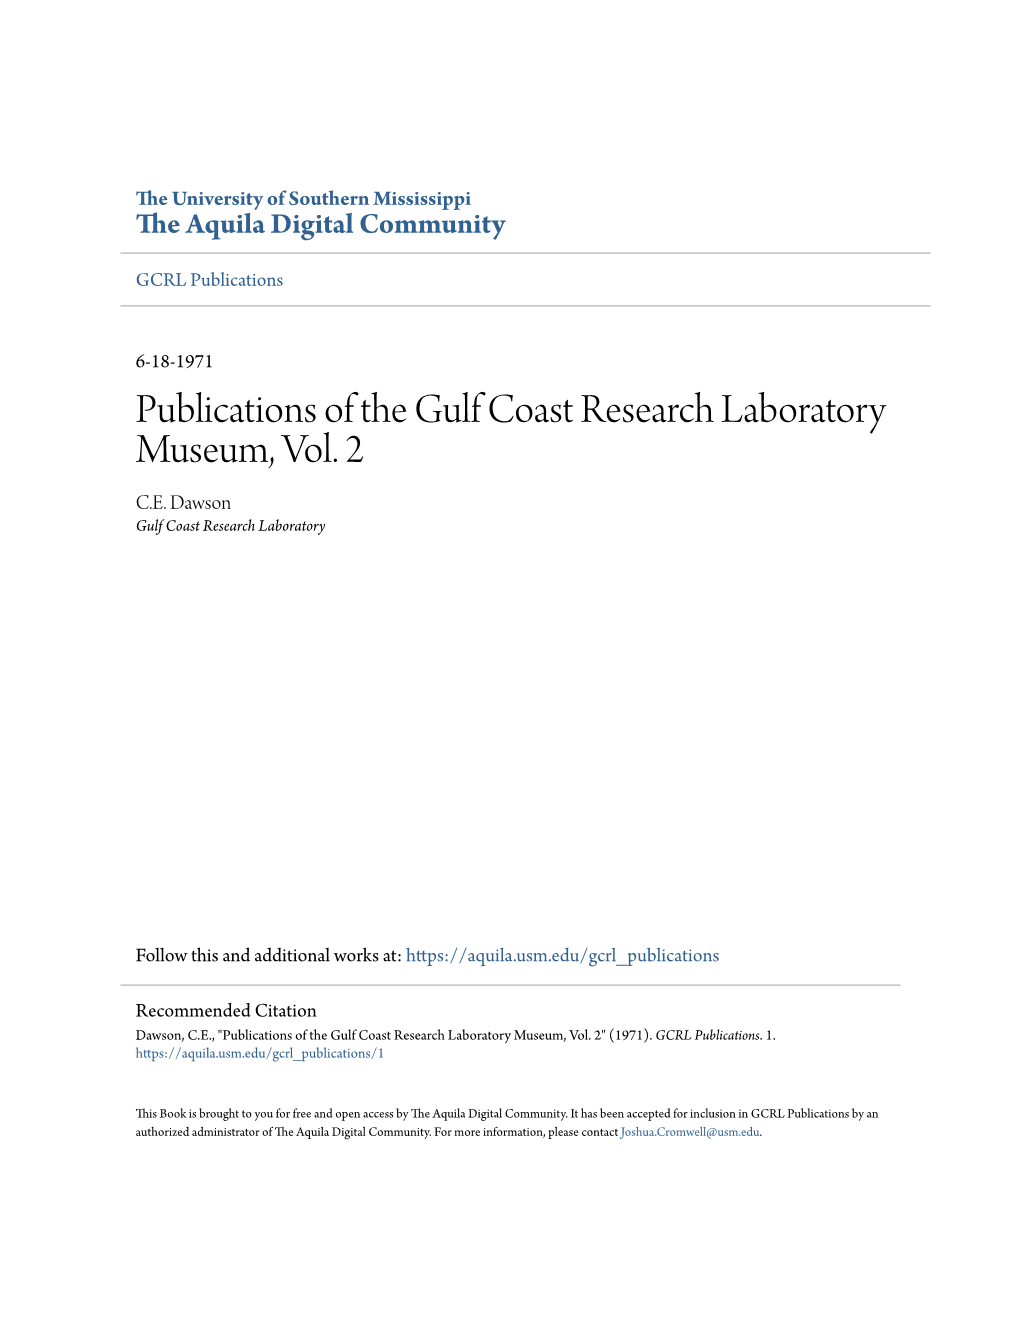 Publications of the Gulf Coast Research Laboratory Museum, Vol. 2 C.E